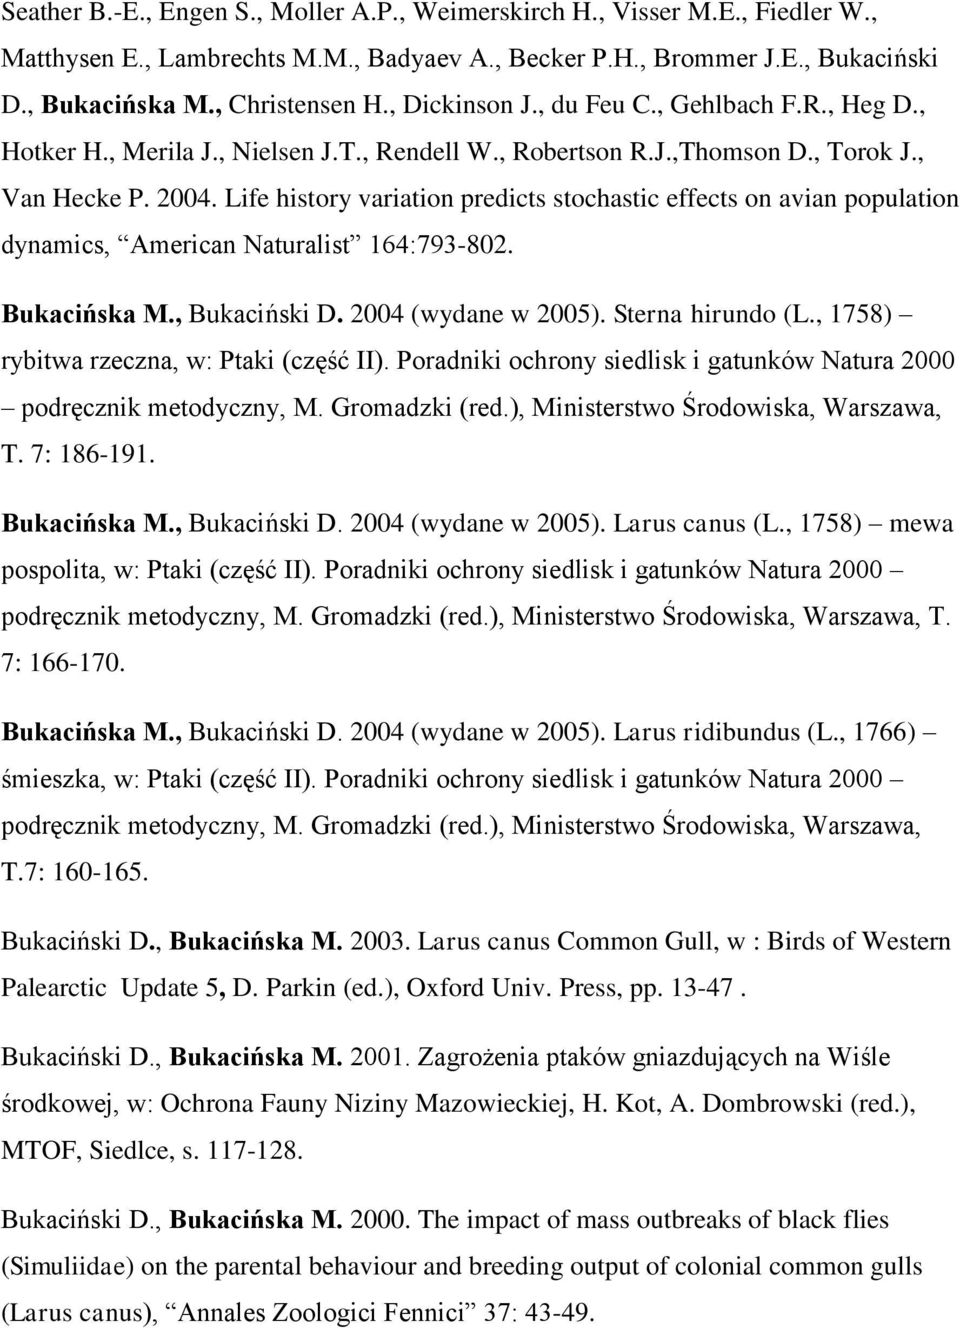 Life history variation predicts stochastic effects on avian population dynamics, American Naturalist 164:793-802. Bukacińska M., Bukaciński D. 2004 (wydane w 2005). Sterna hirundo (L.